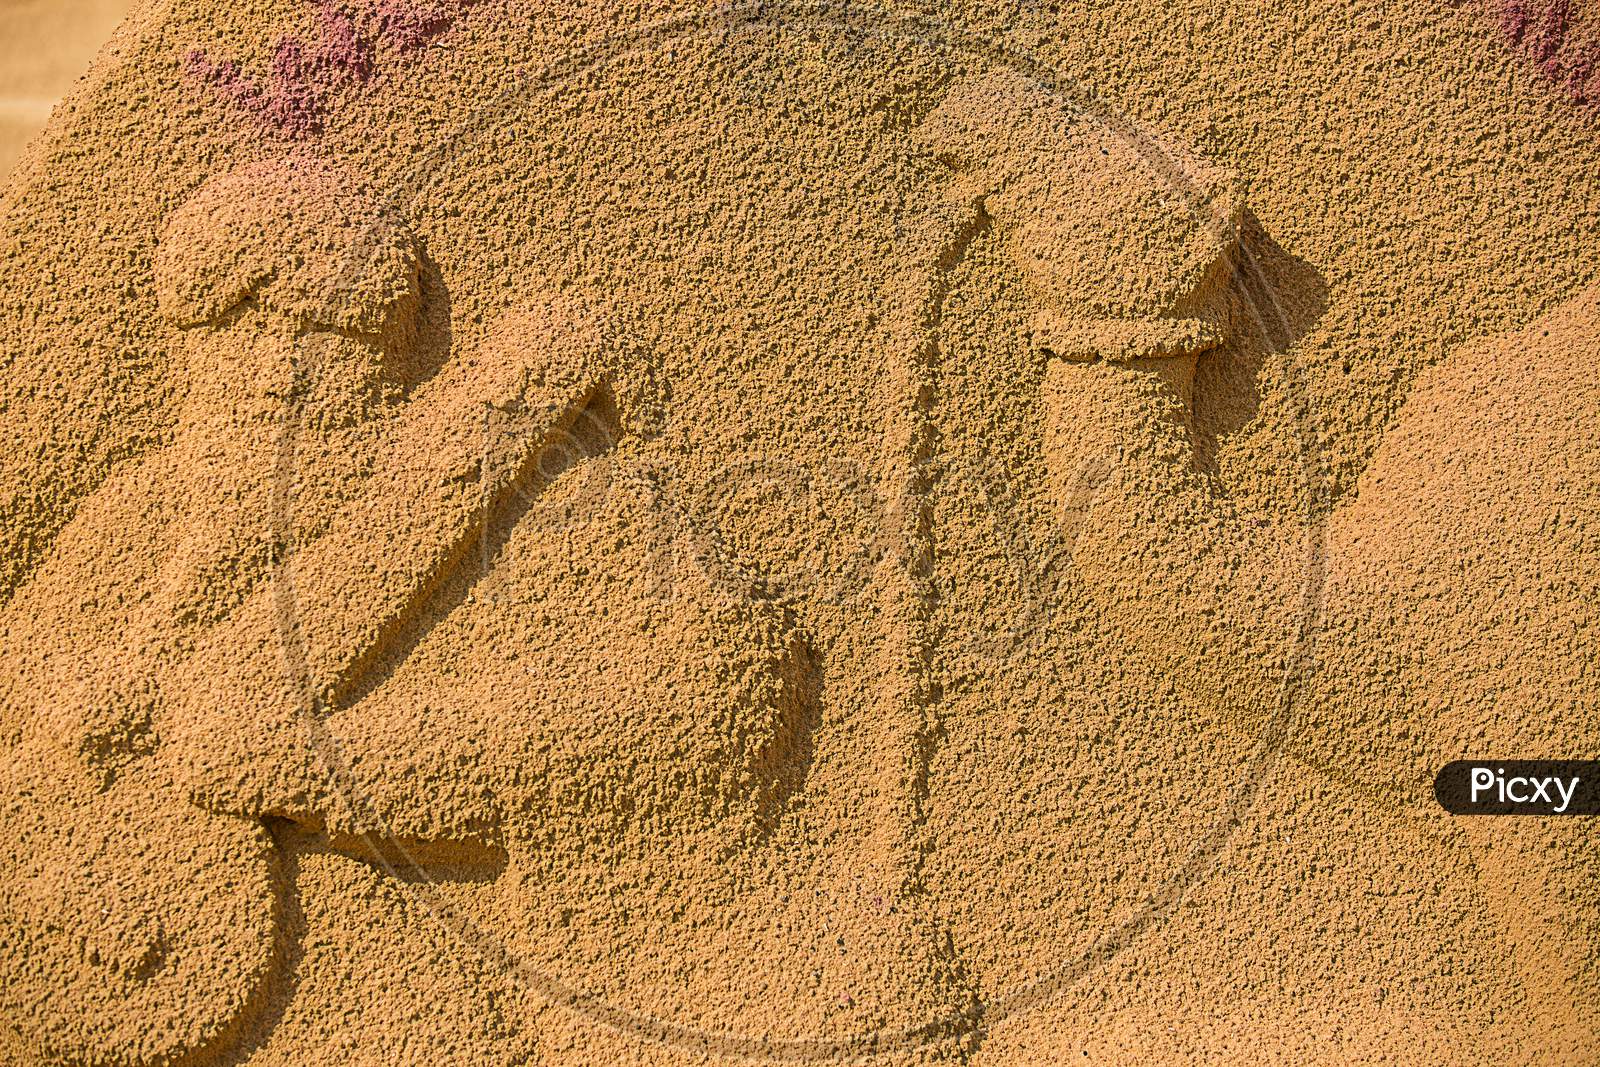 Sand Sculpture Art Of A Man And A Camel At Pushkar Camel Fair.